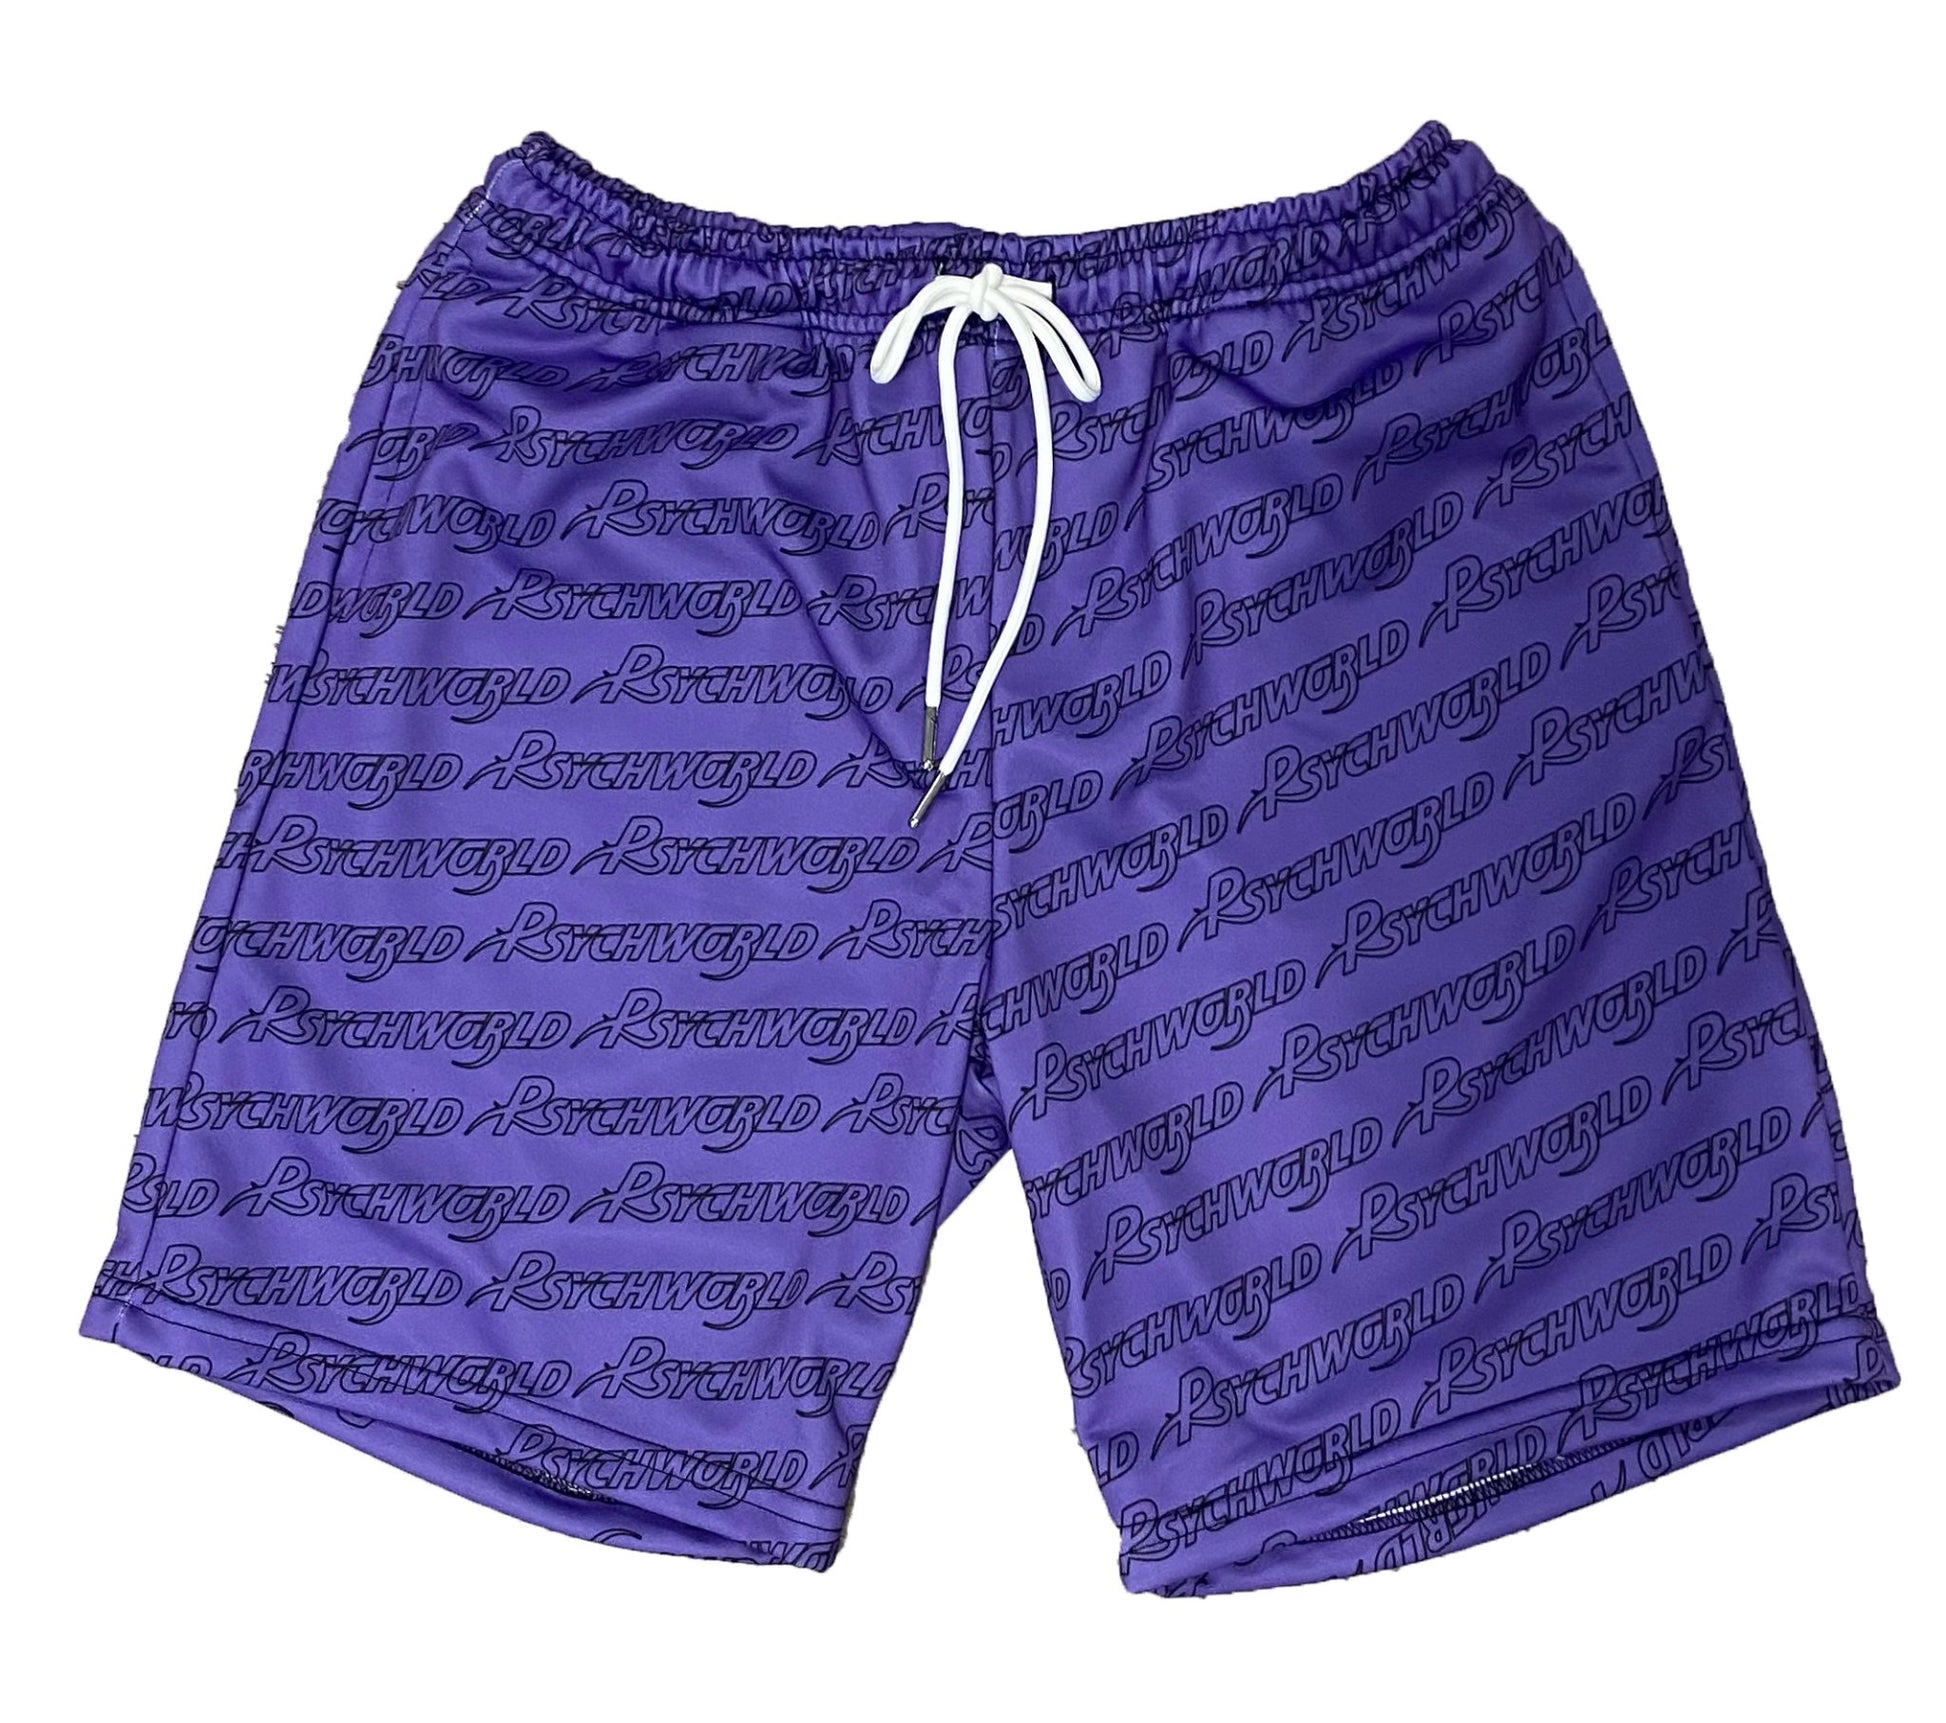 Psychworld Purple Shorts Black Logos - Paroissesaintefoy Sneakers Sale Online